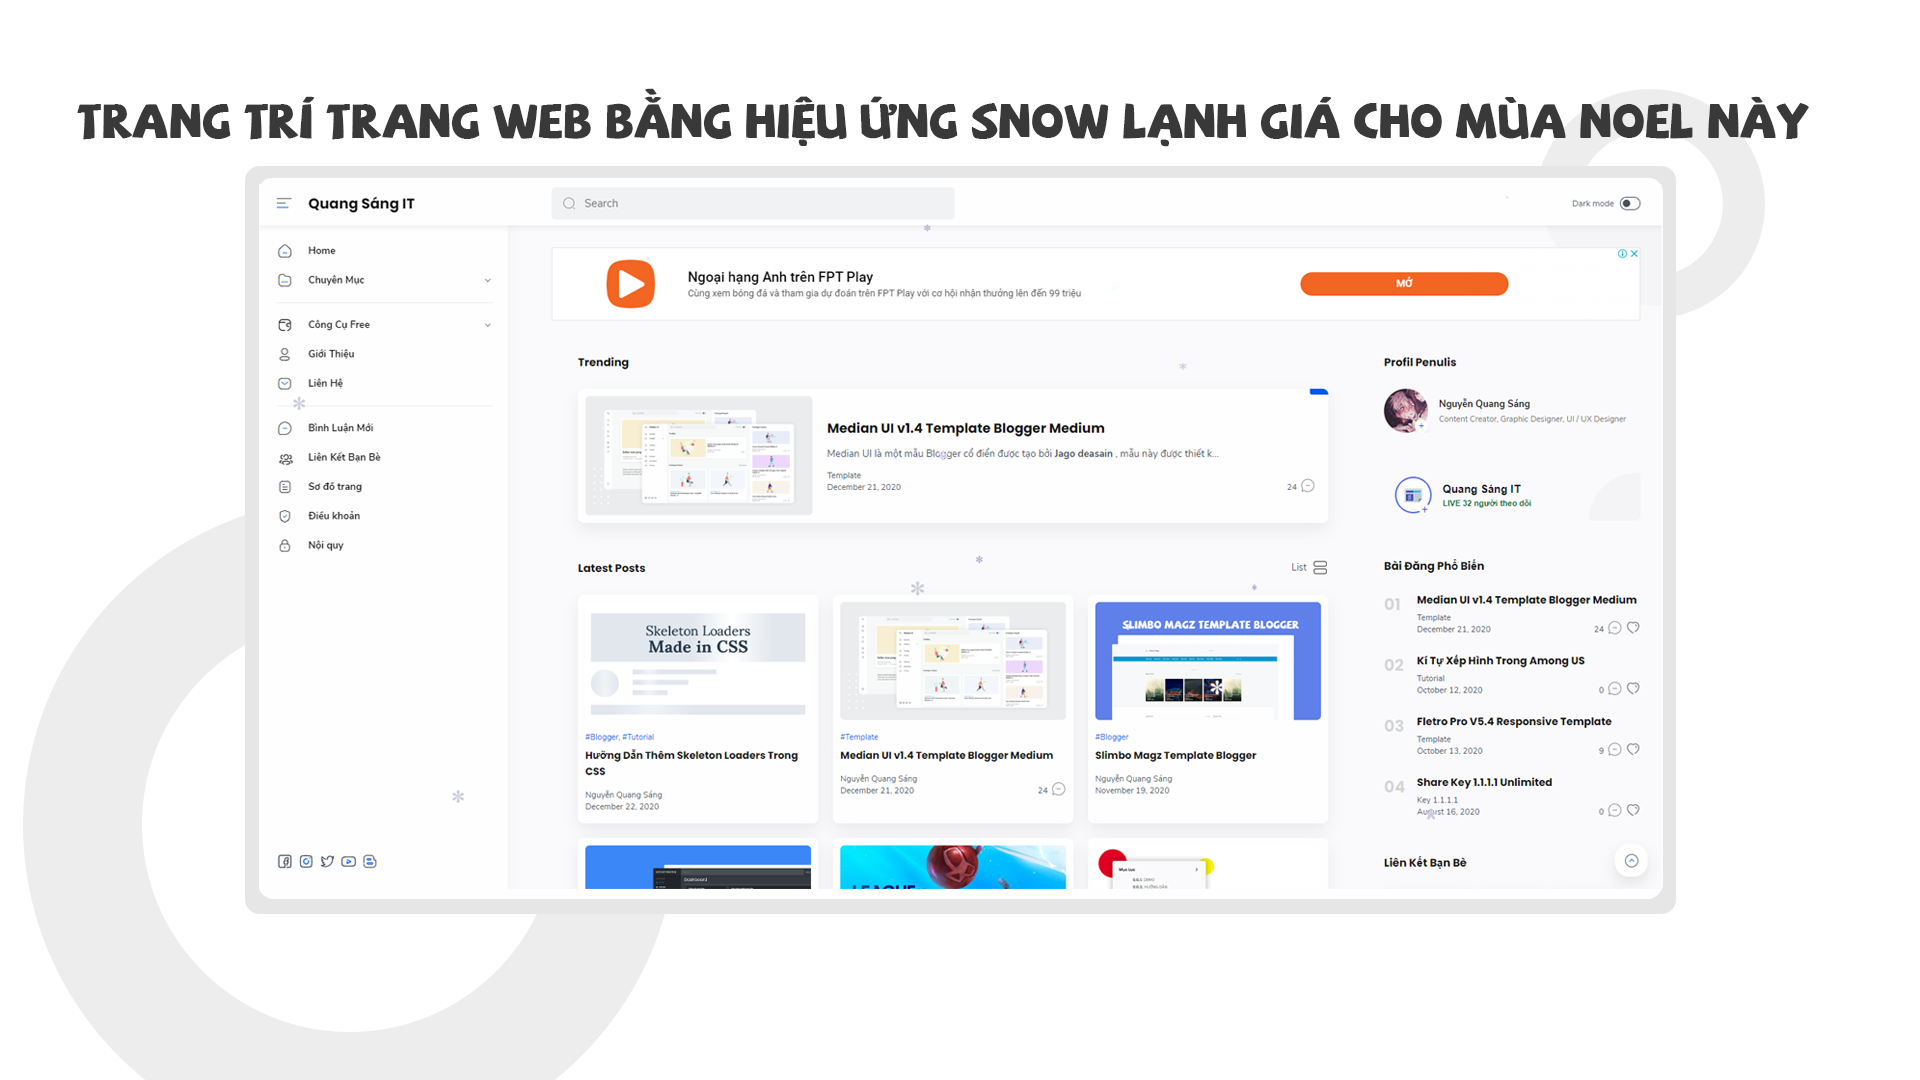 Trang Tri Trang Web Bang Hieu Ung Snow Lanh Gia